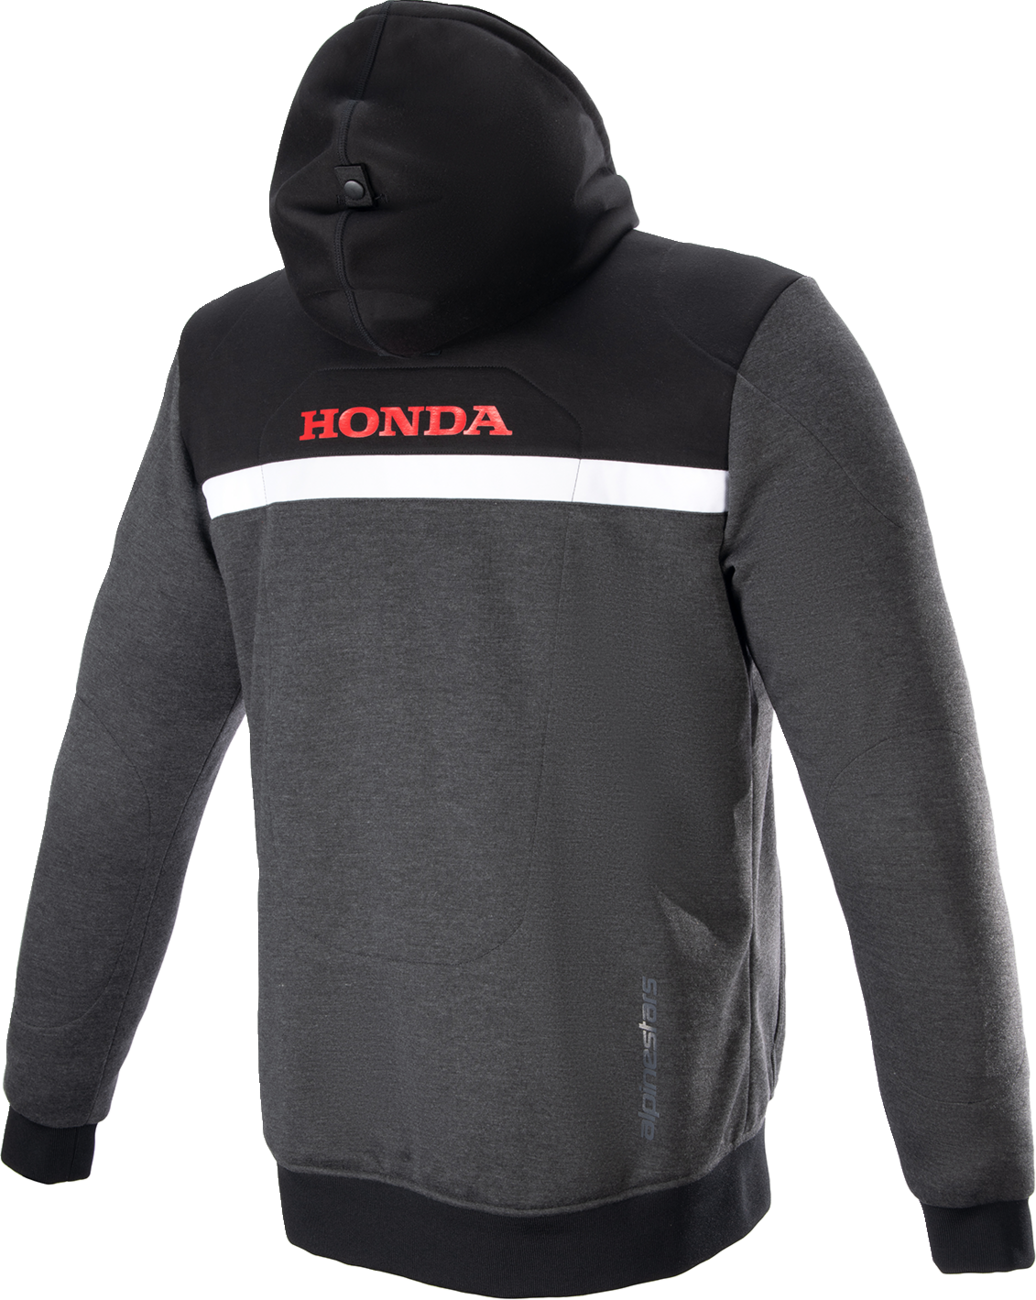 ALPINESTARS Honda Chrome Street Hoodie - Black/Gray/Red - XL 4201323-1908-XL